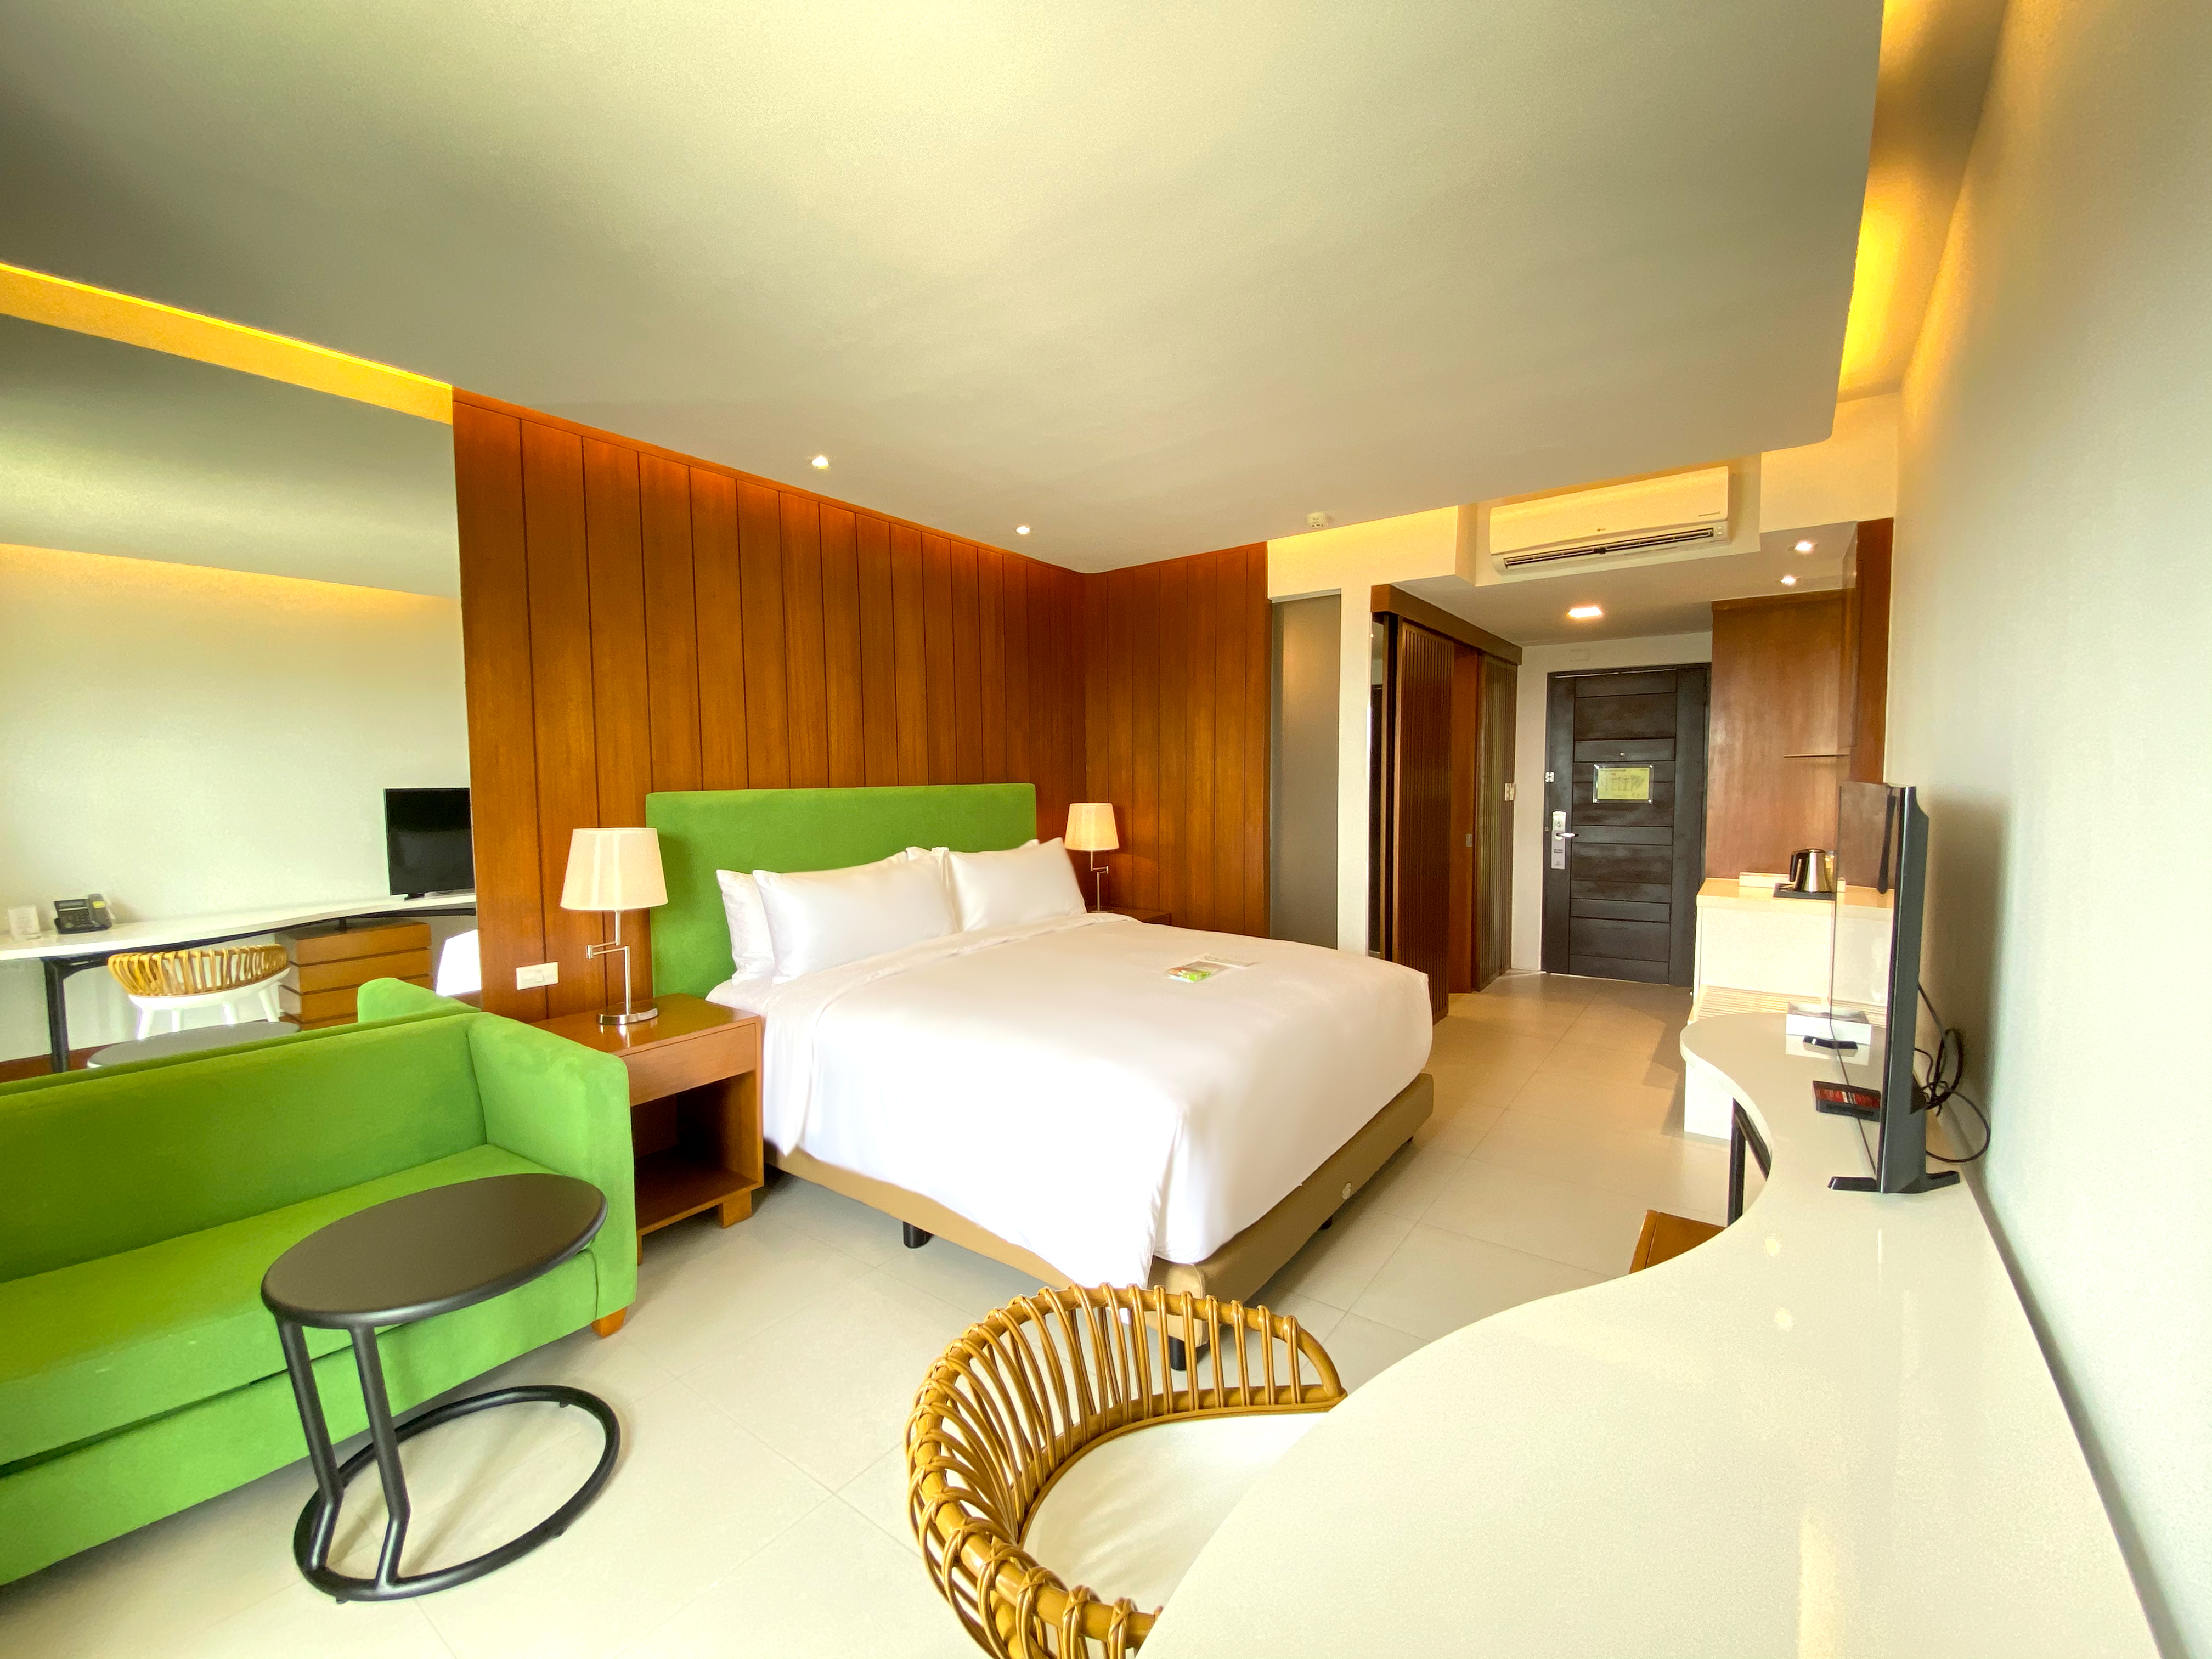 Timberland Highlands Resort(サン・マテオ)を宿泊予約 - 2023年安い料金プラン・口コミ・部屋写真 | Trip.com